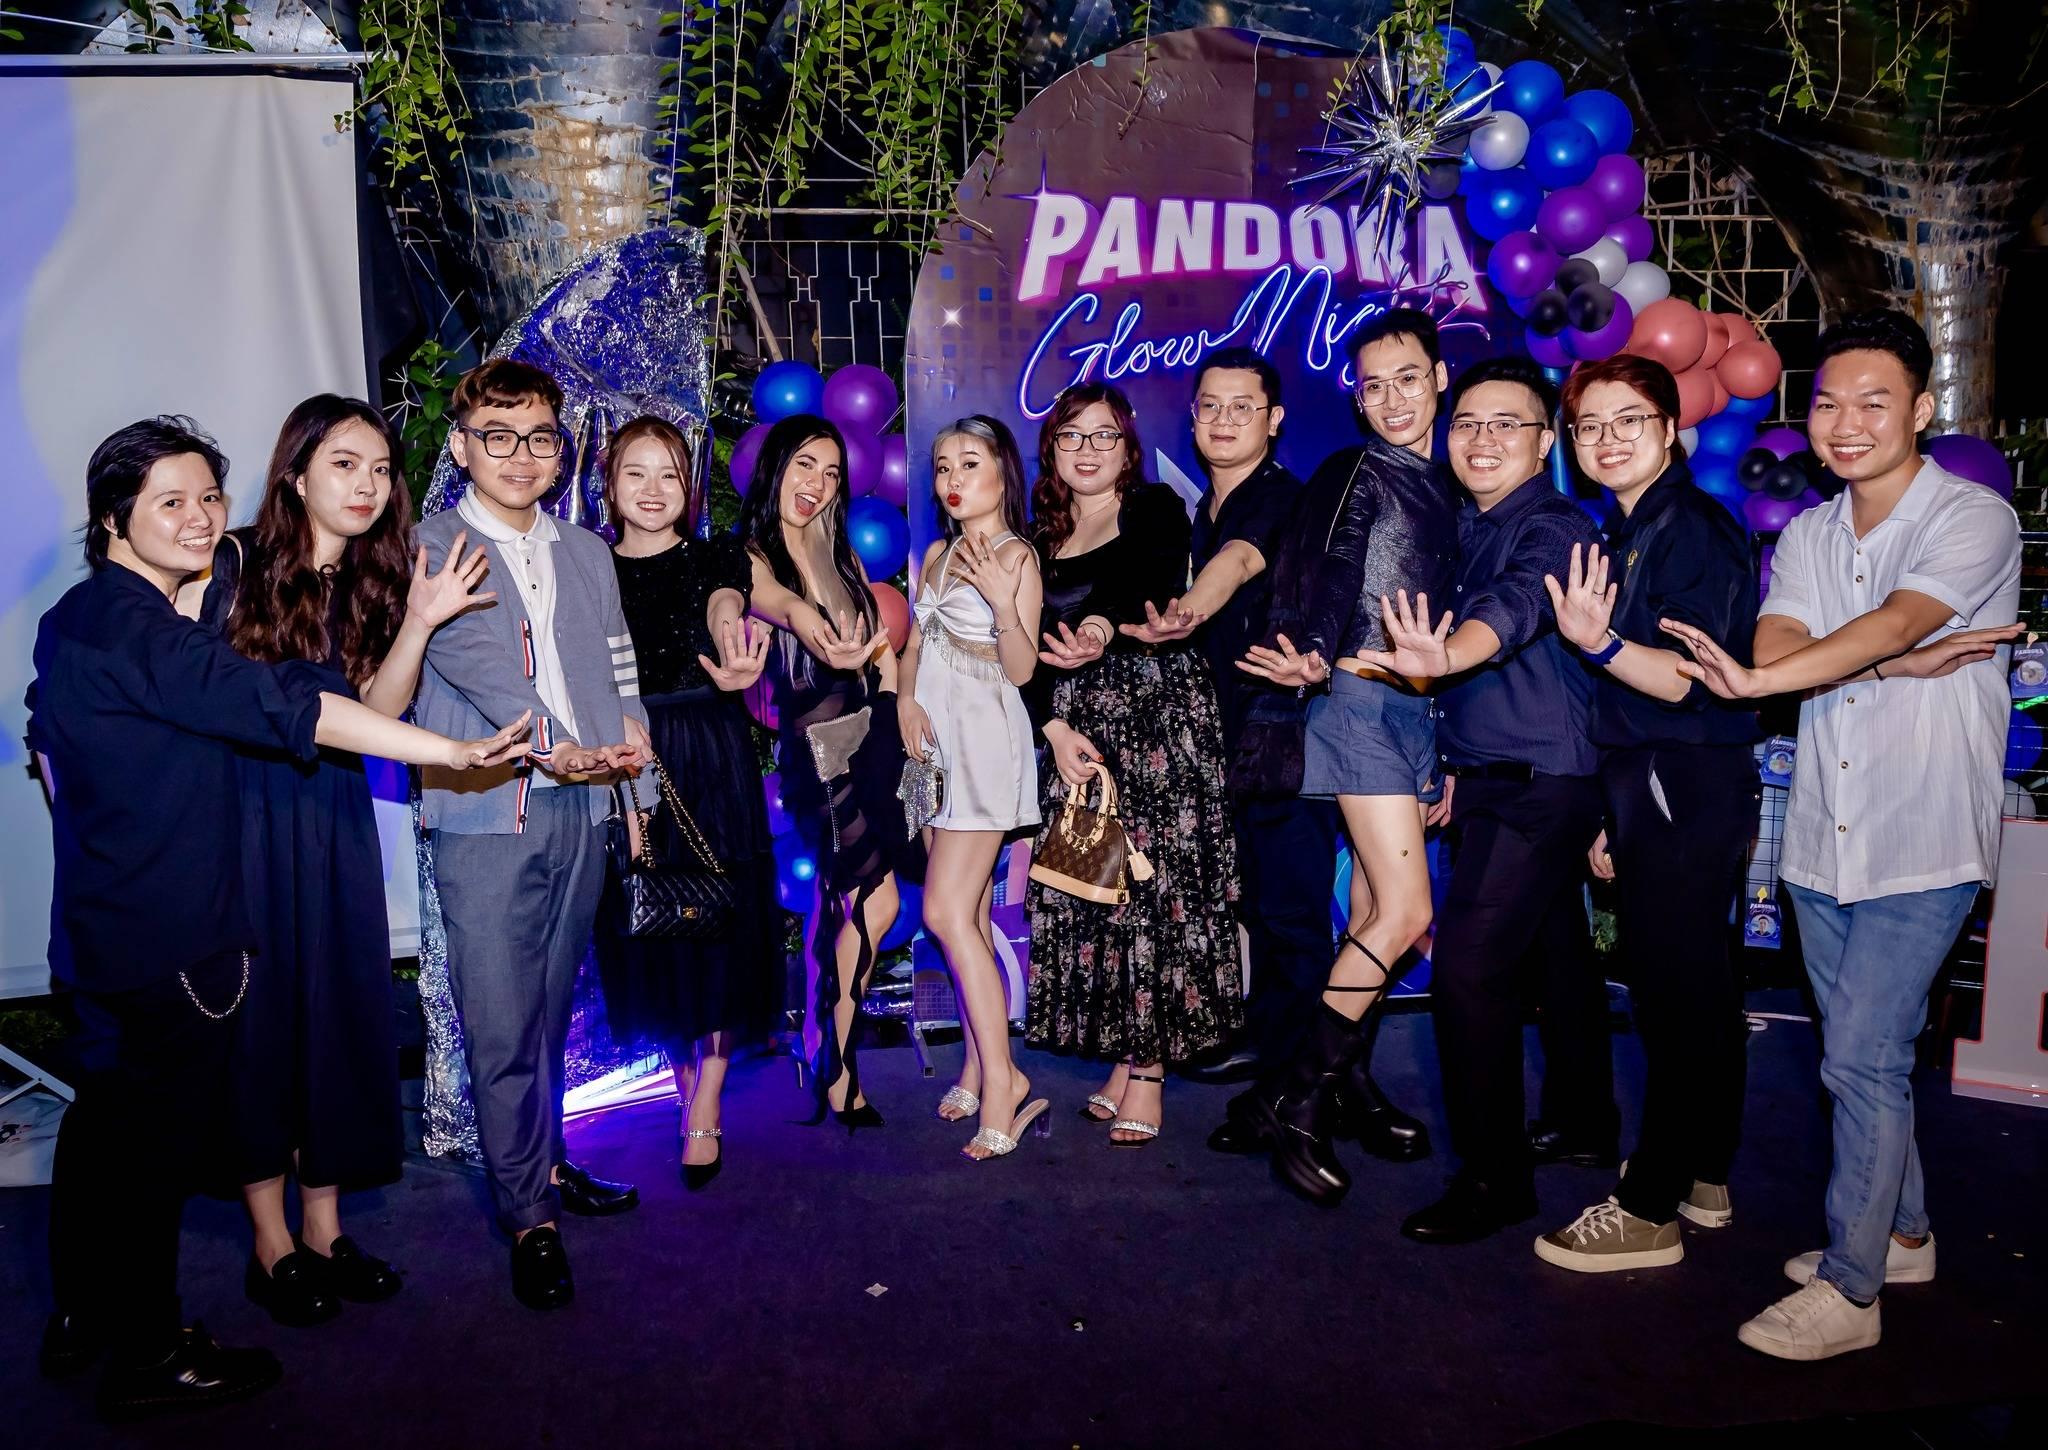 Pandora Network